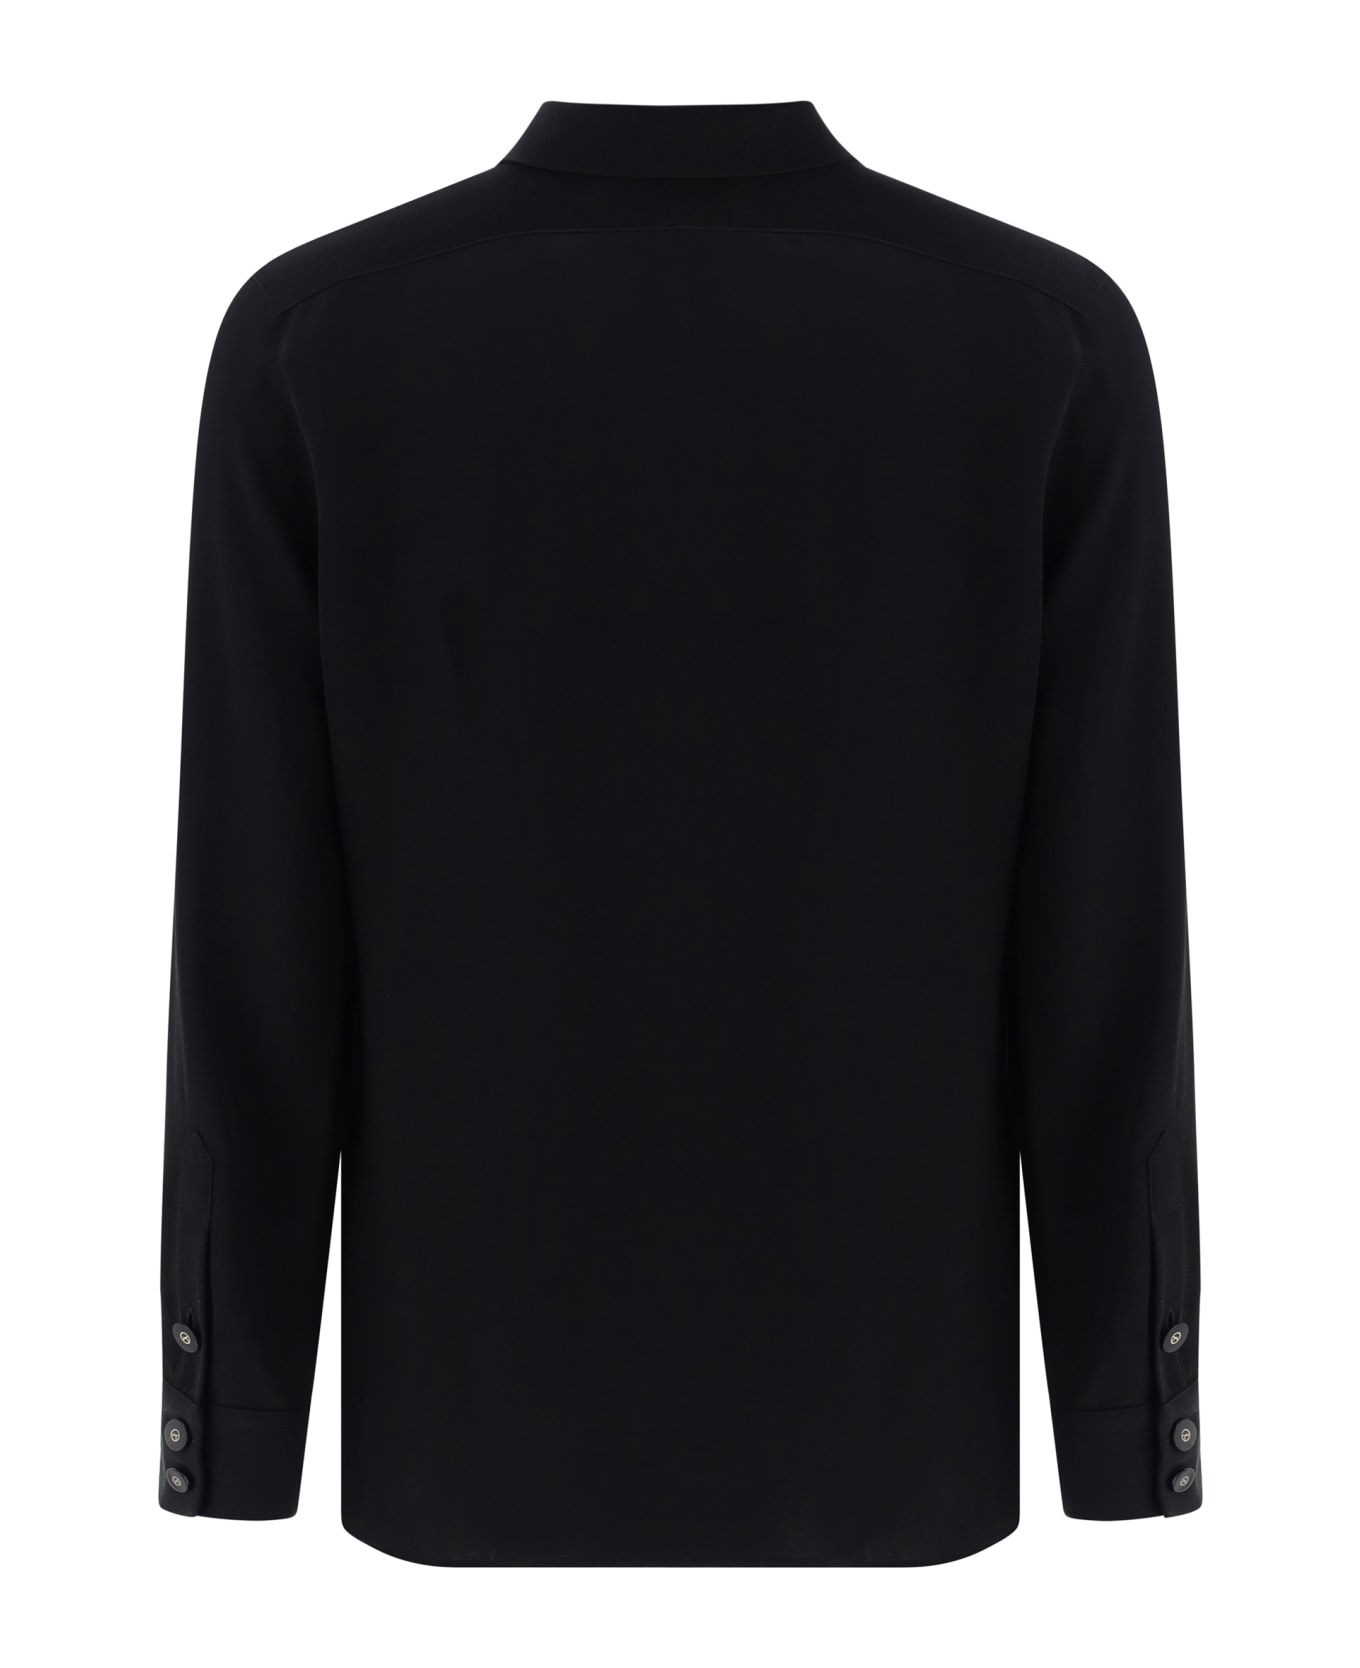 Giorgio Armani Shirt - Black Beauty